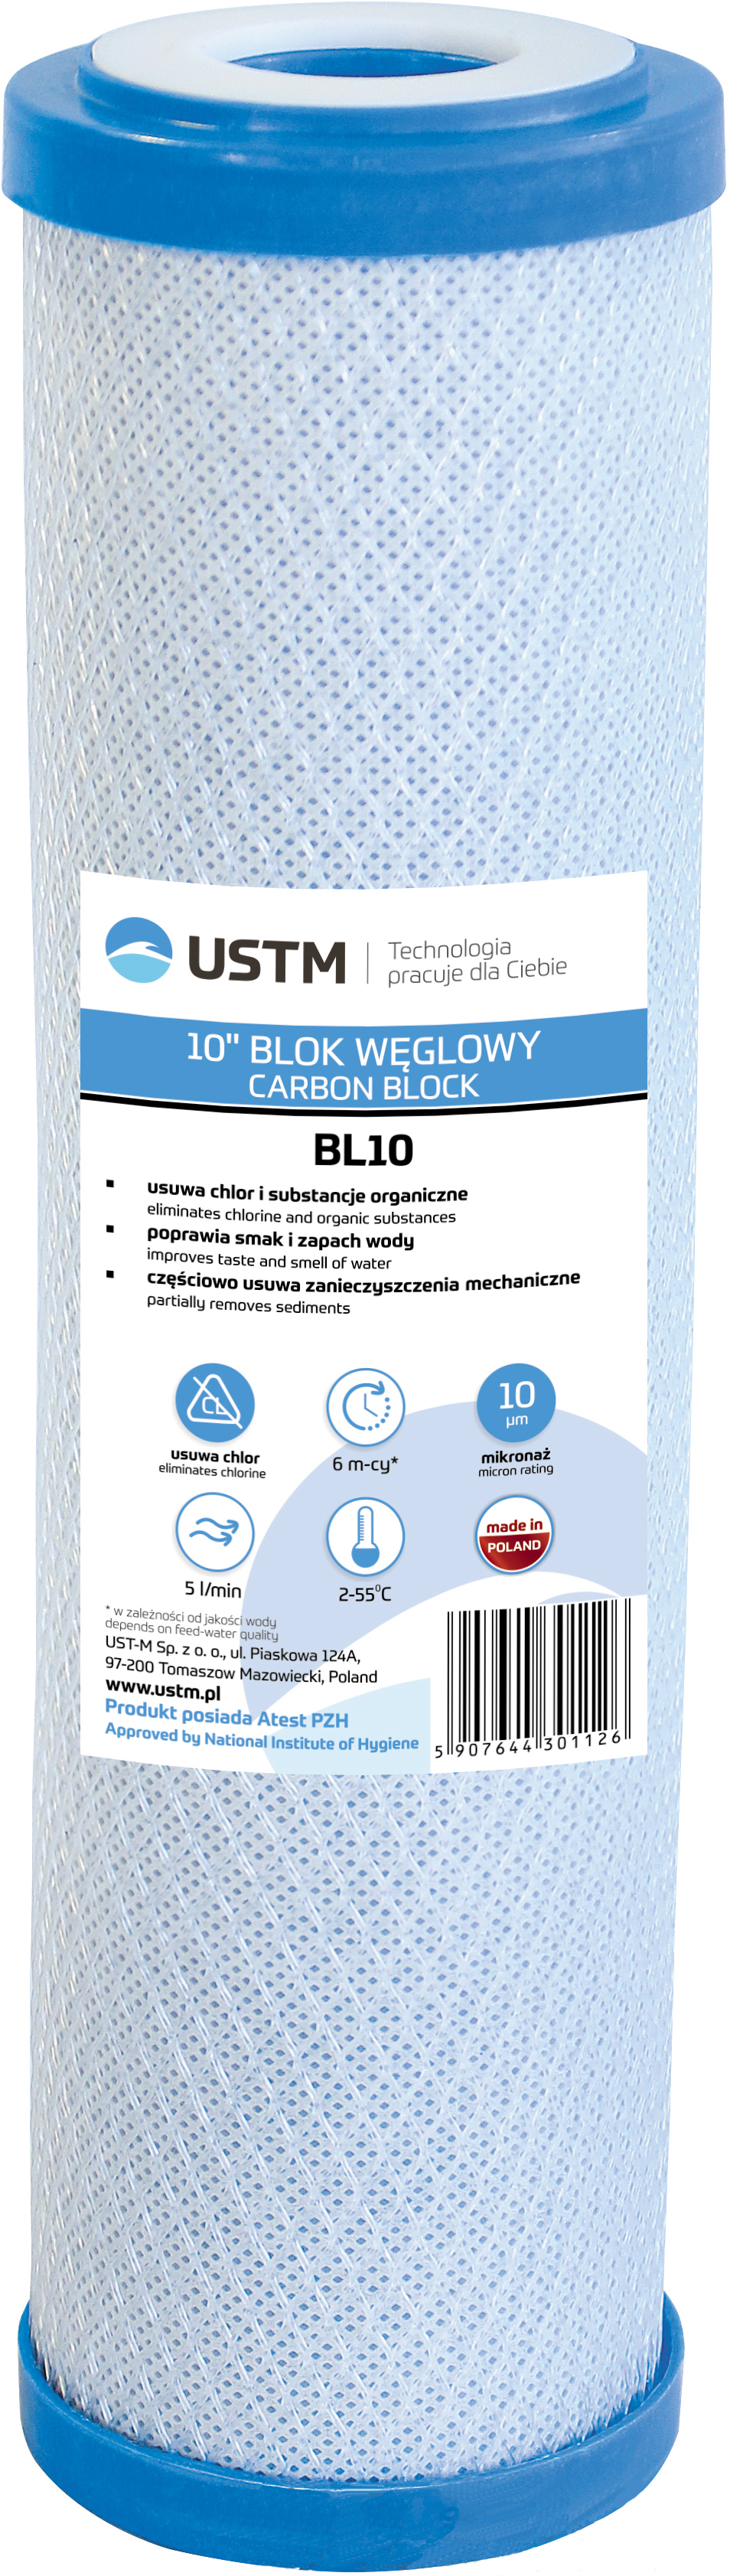 Картридж для фильтра USTM BL10